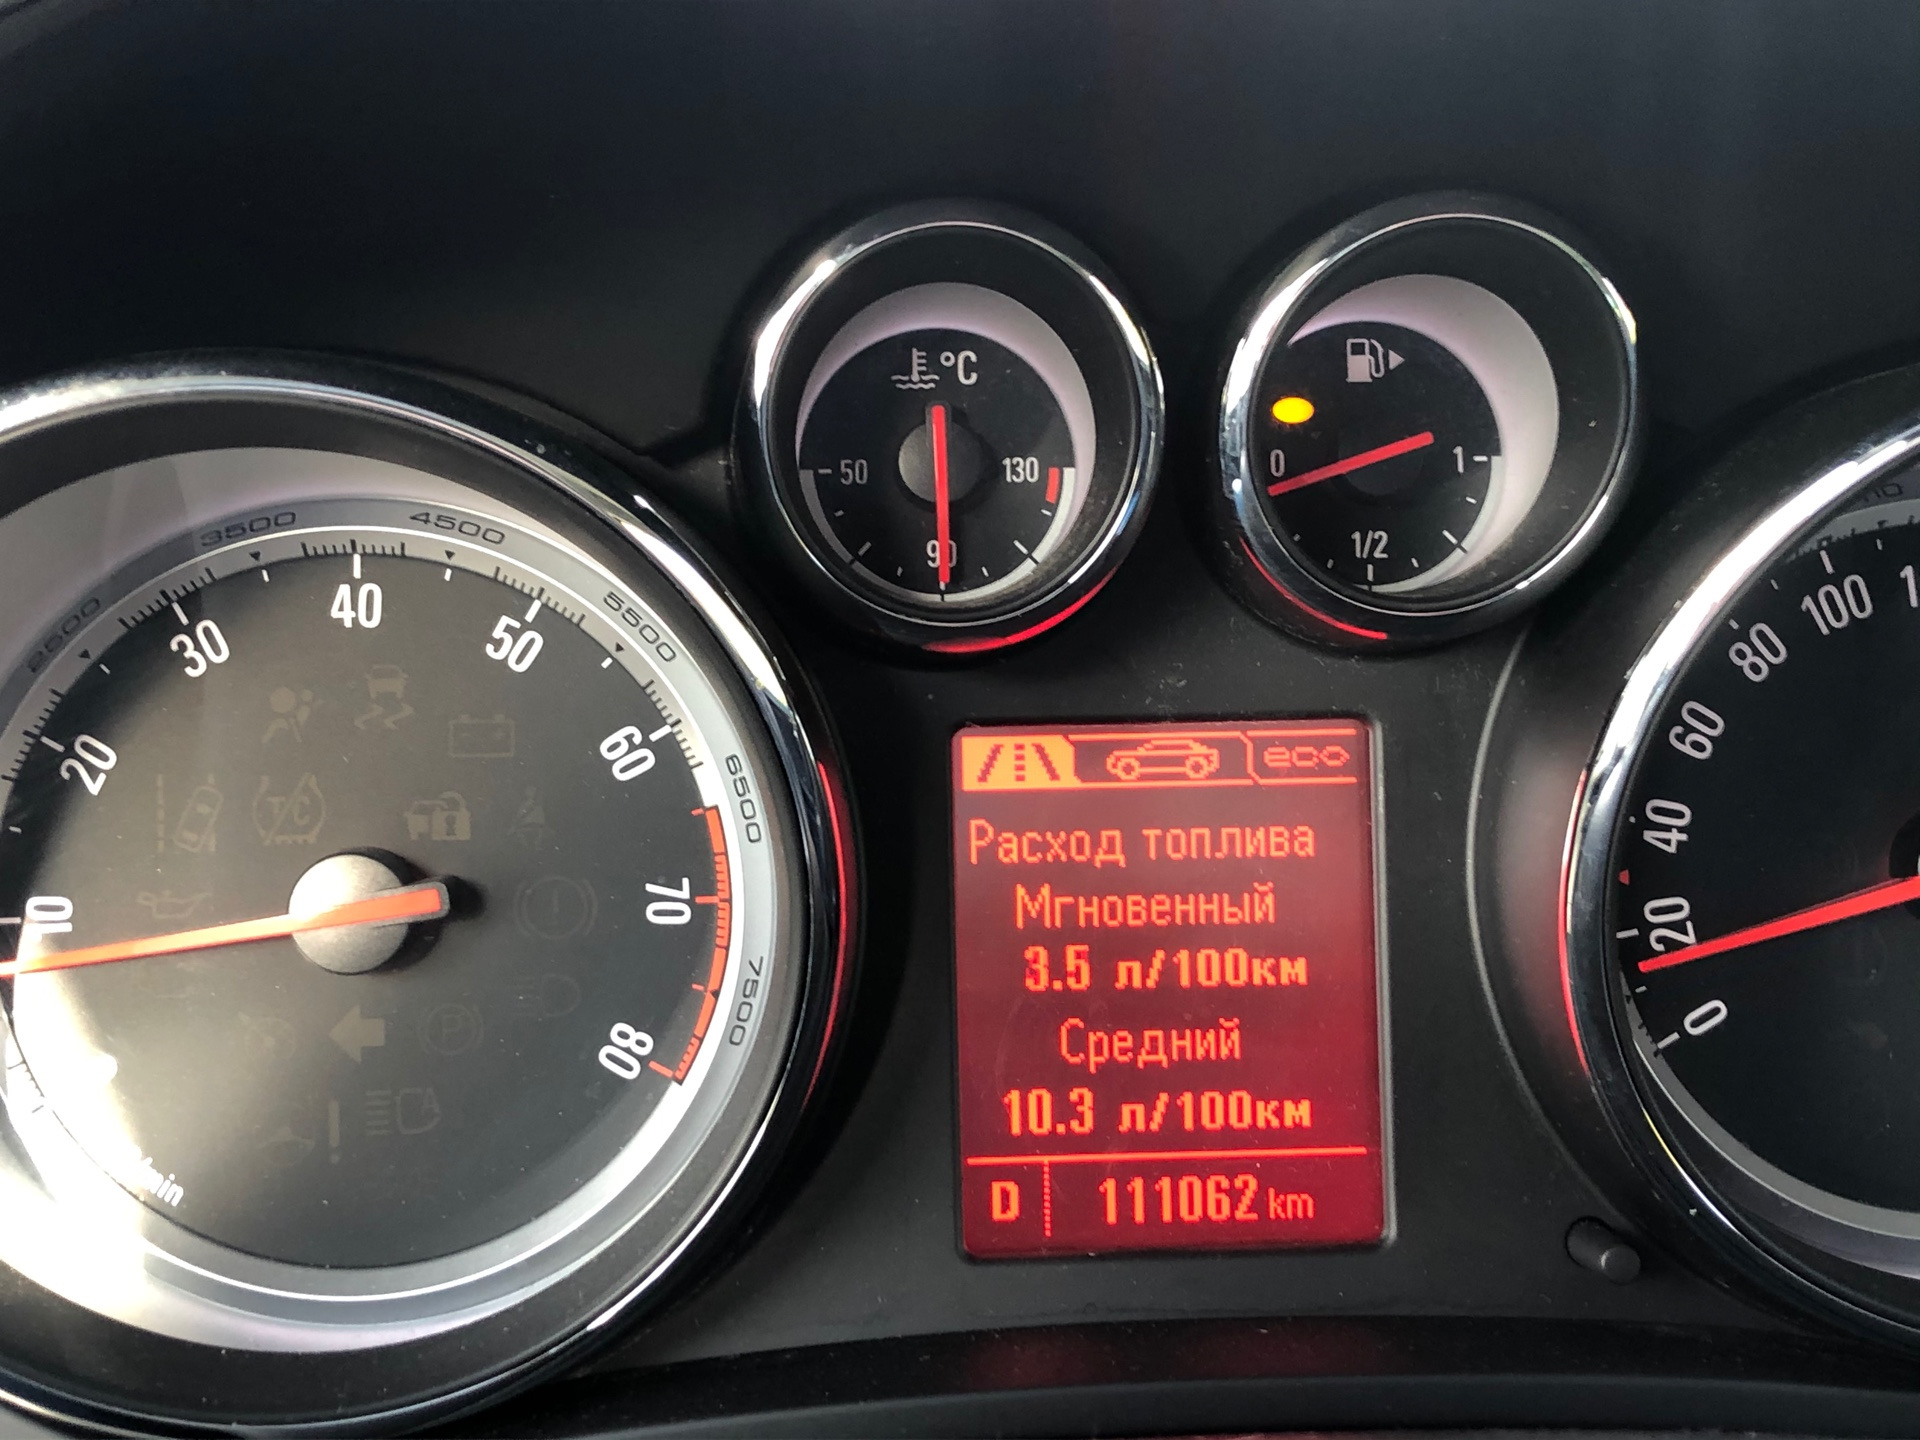 Зафира б температура двигателя. Температура Опель. Opel Astra h скрытое меню БК. Скрытое меню f30 temperature.